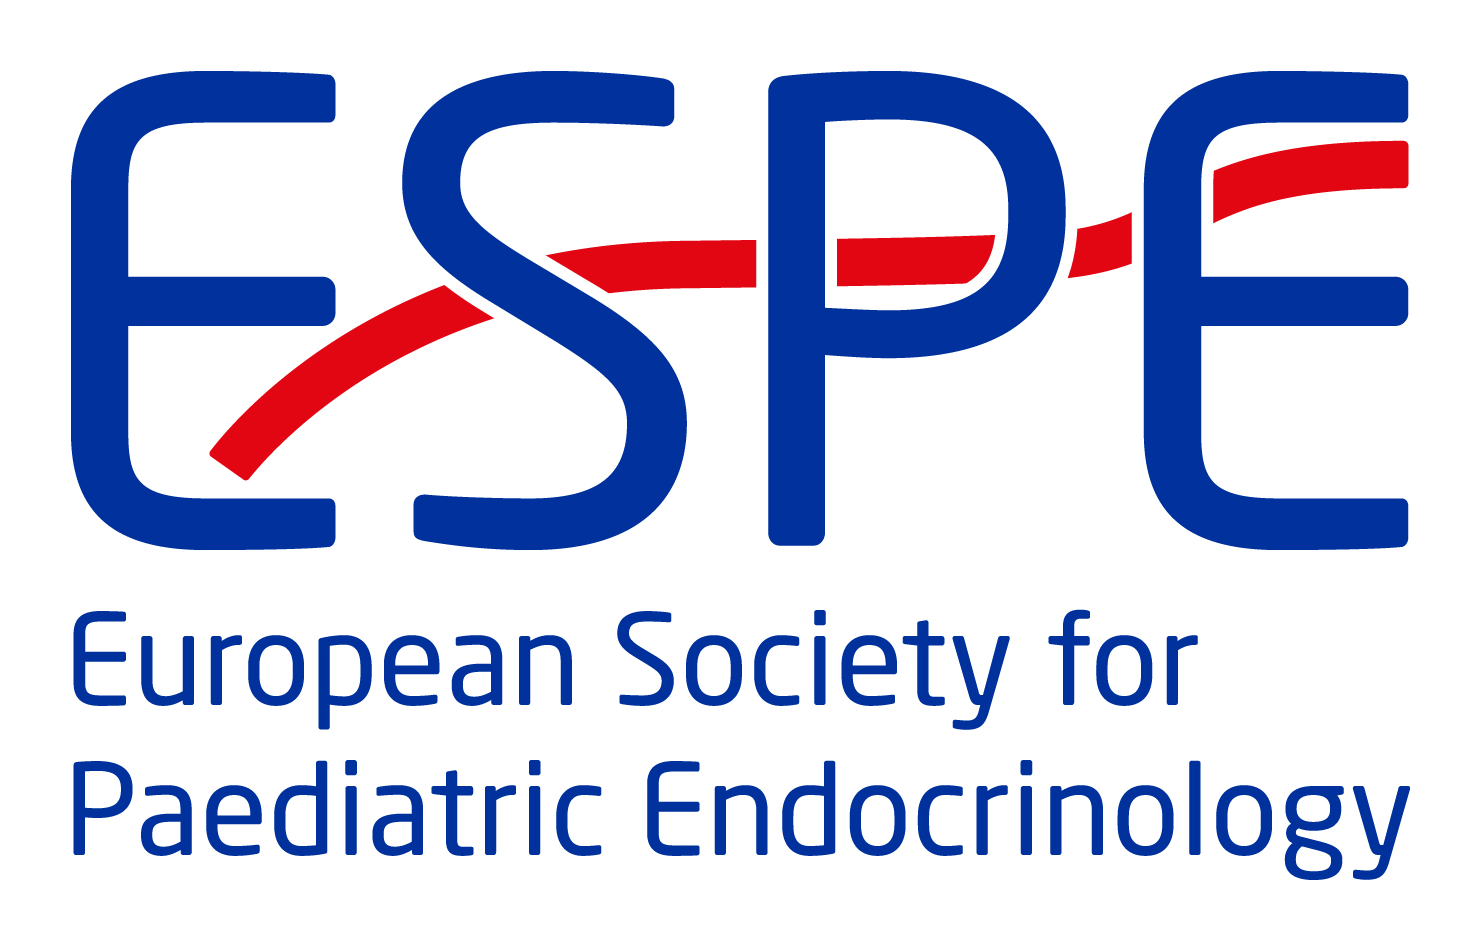 European Society for Paediatric Endocrinology and Diabetes